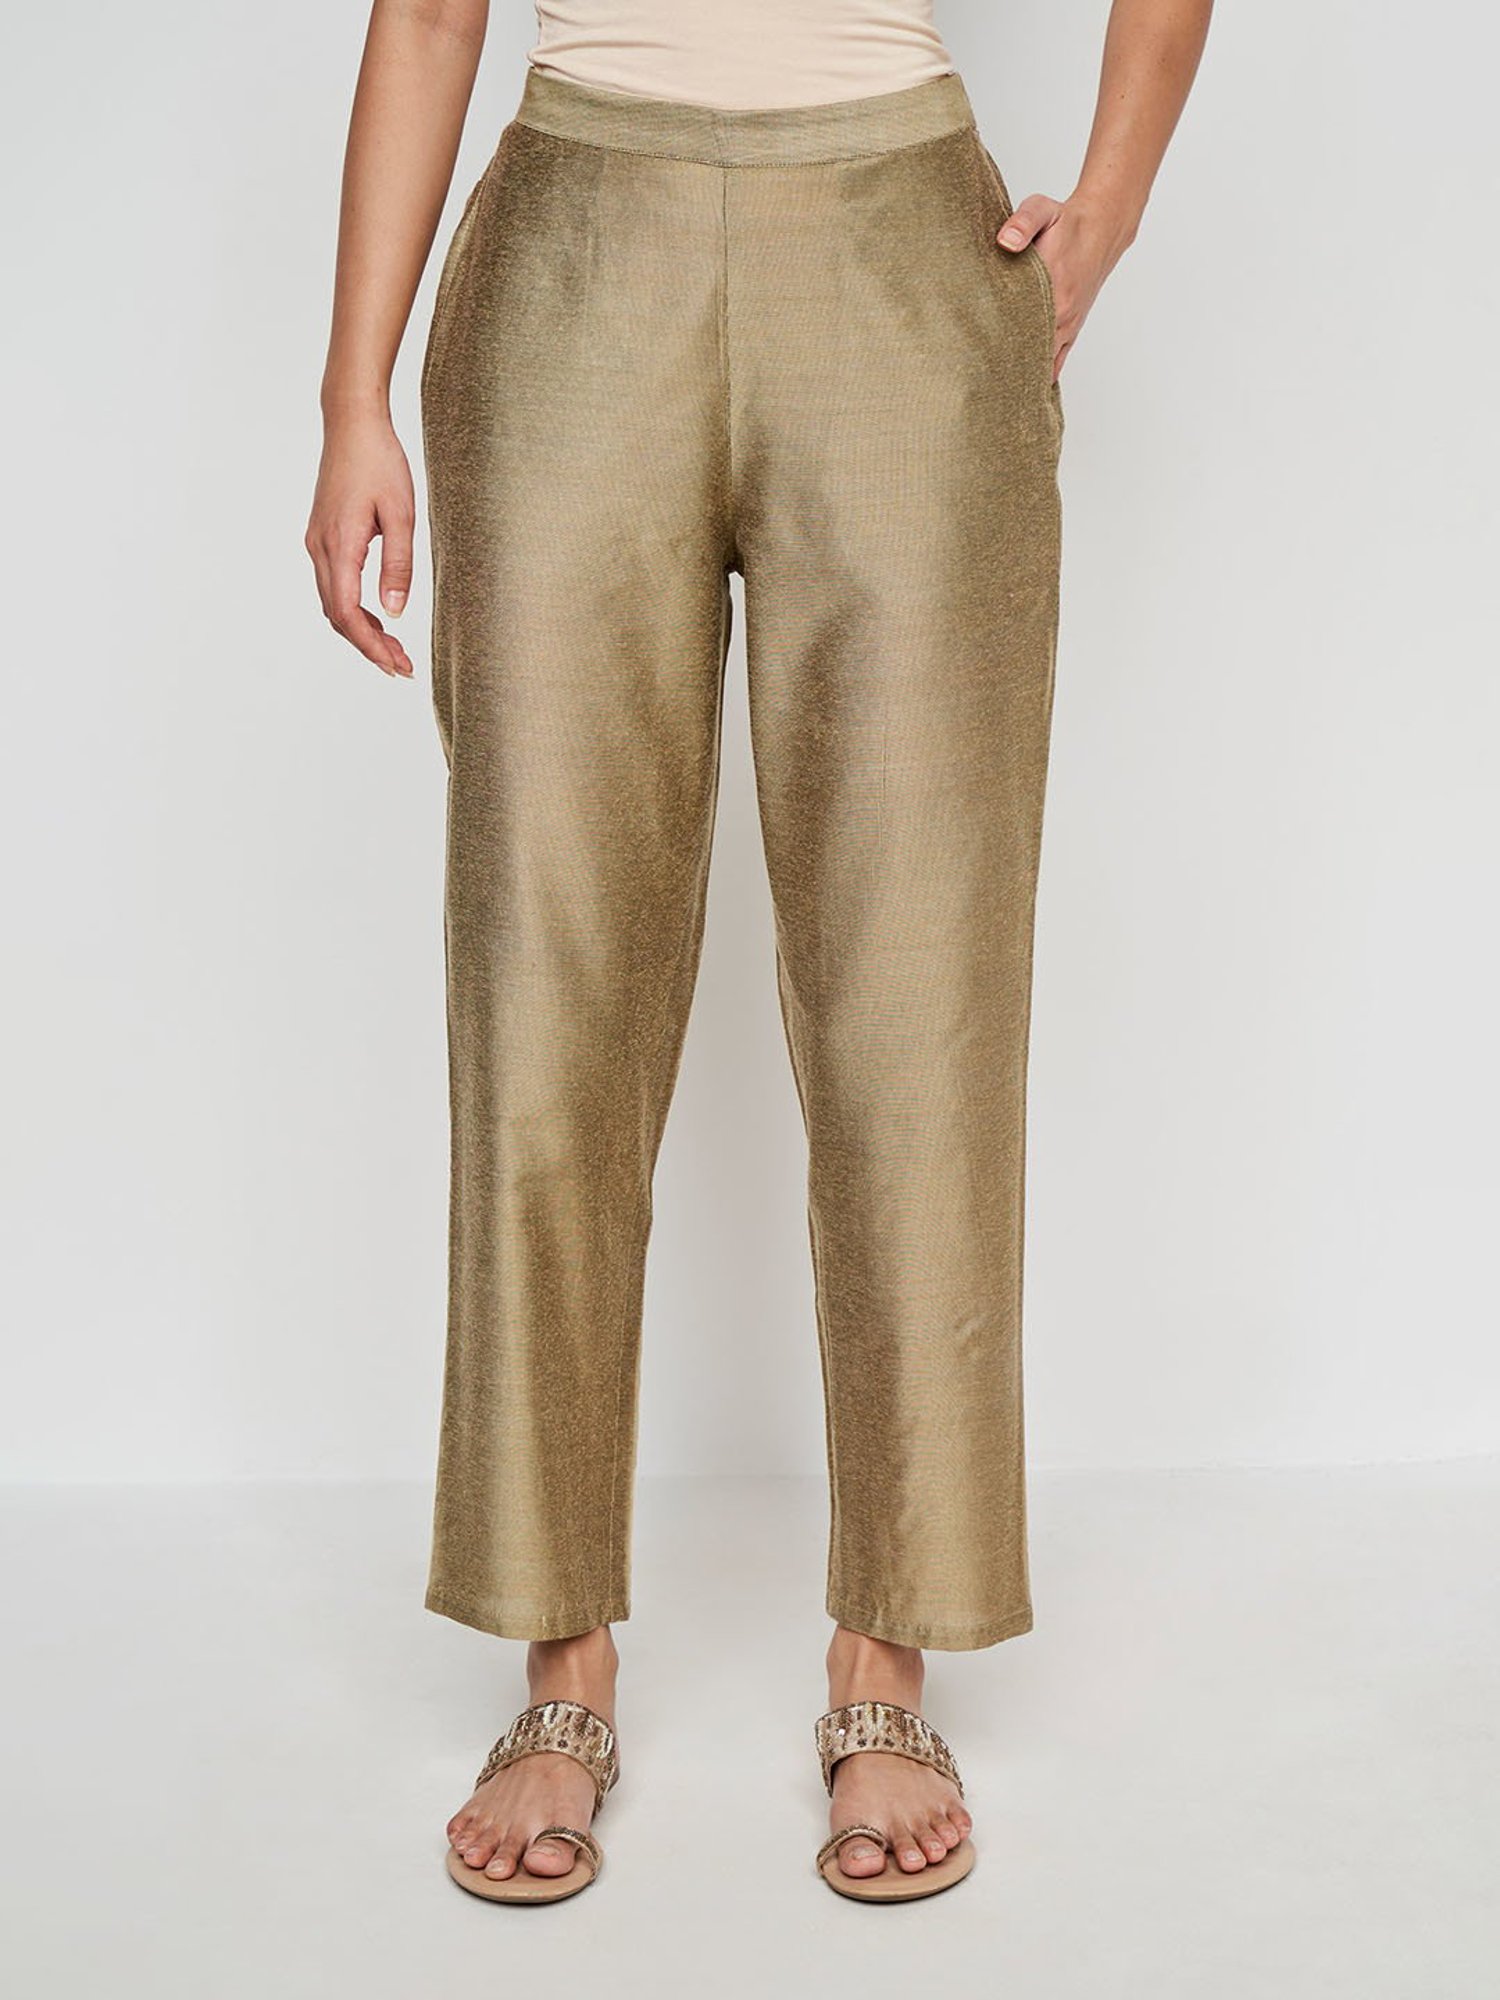 ASOS DESIGN oversized tapered suit trousers in gold metallic  ASOS